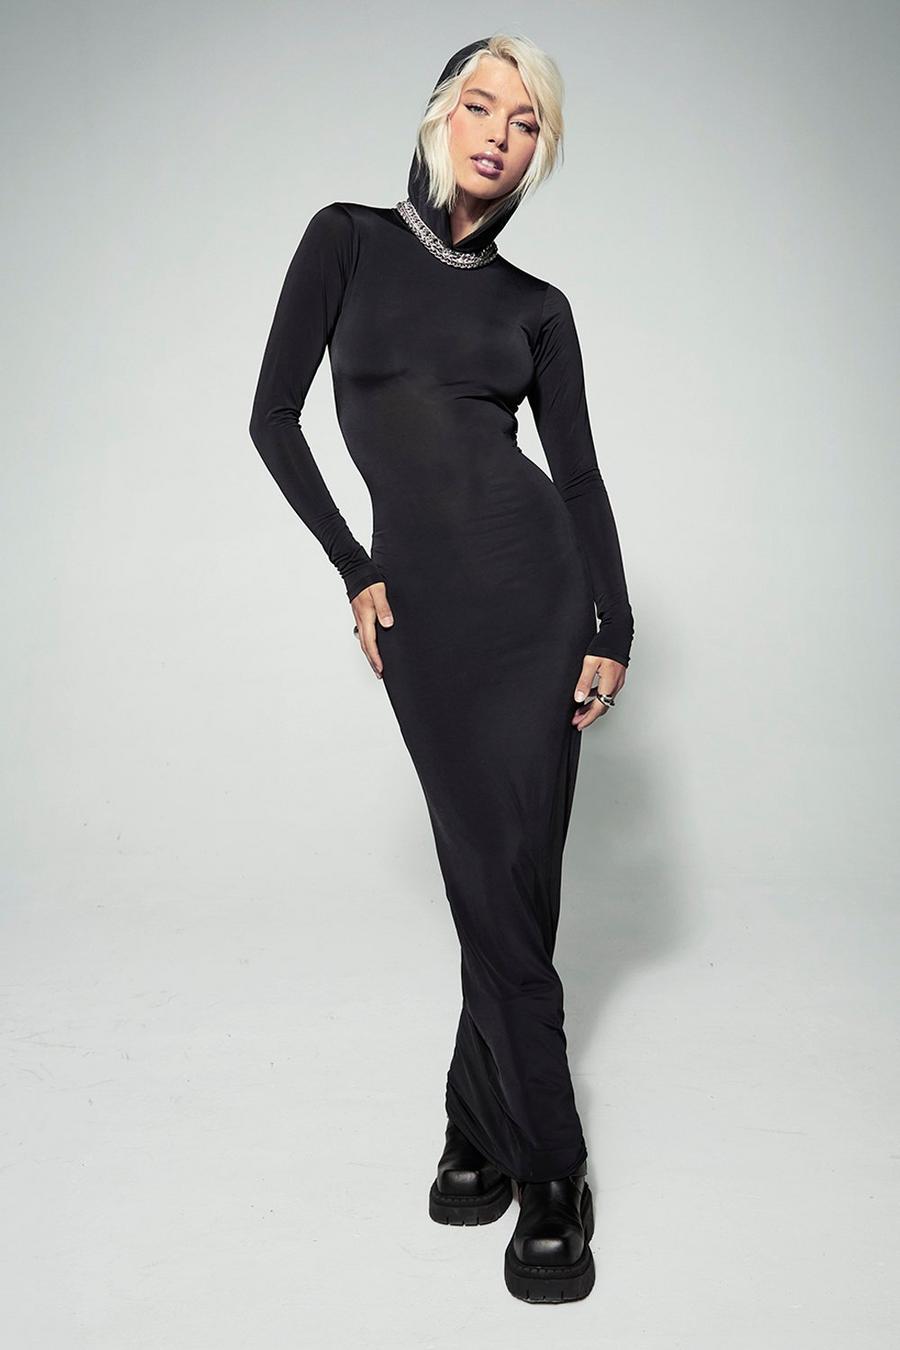 Black negro Kourtney Kardashian Barker Slinky Hooded Maxi Dress